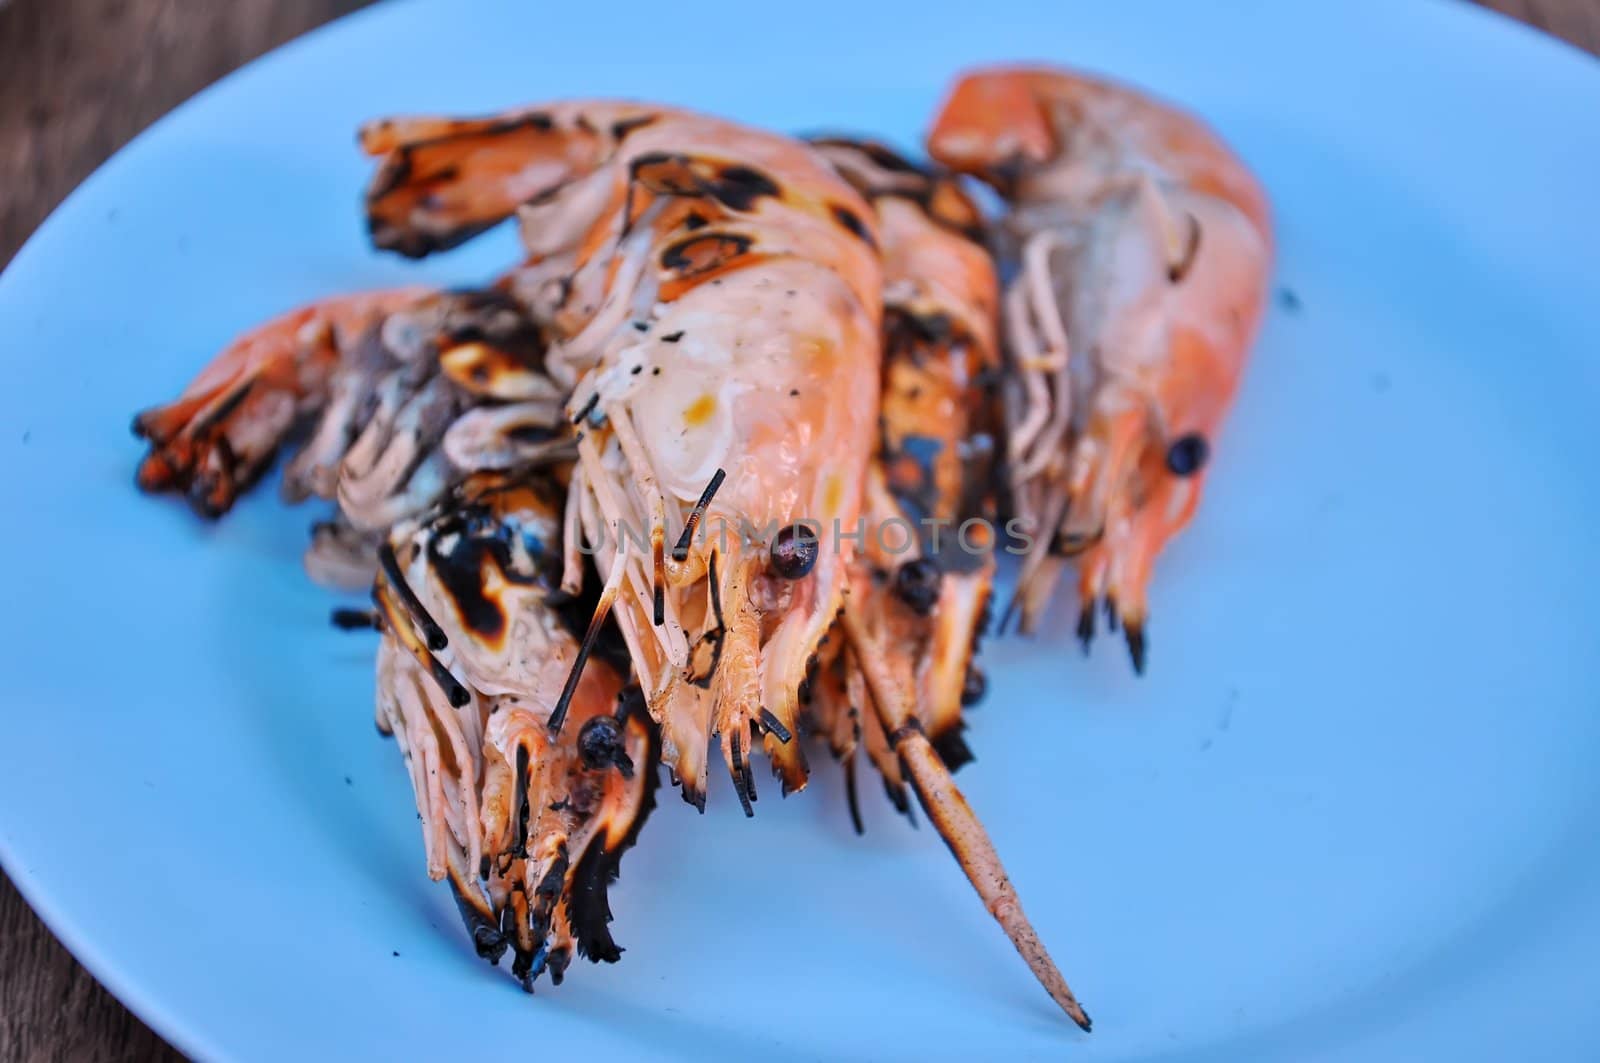 grilled shrimps by phanlop88